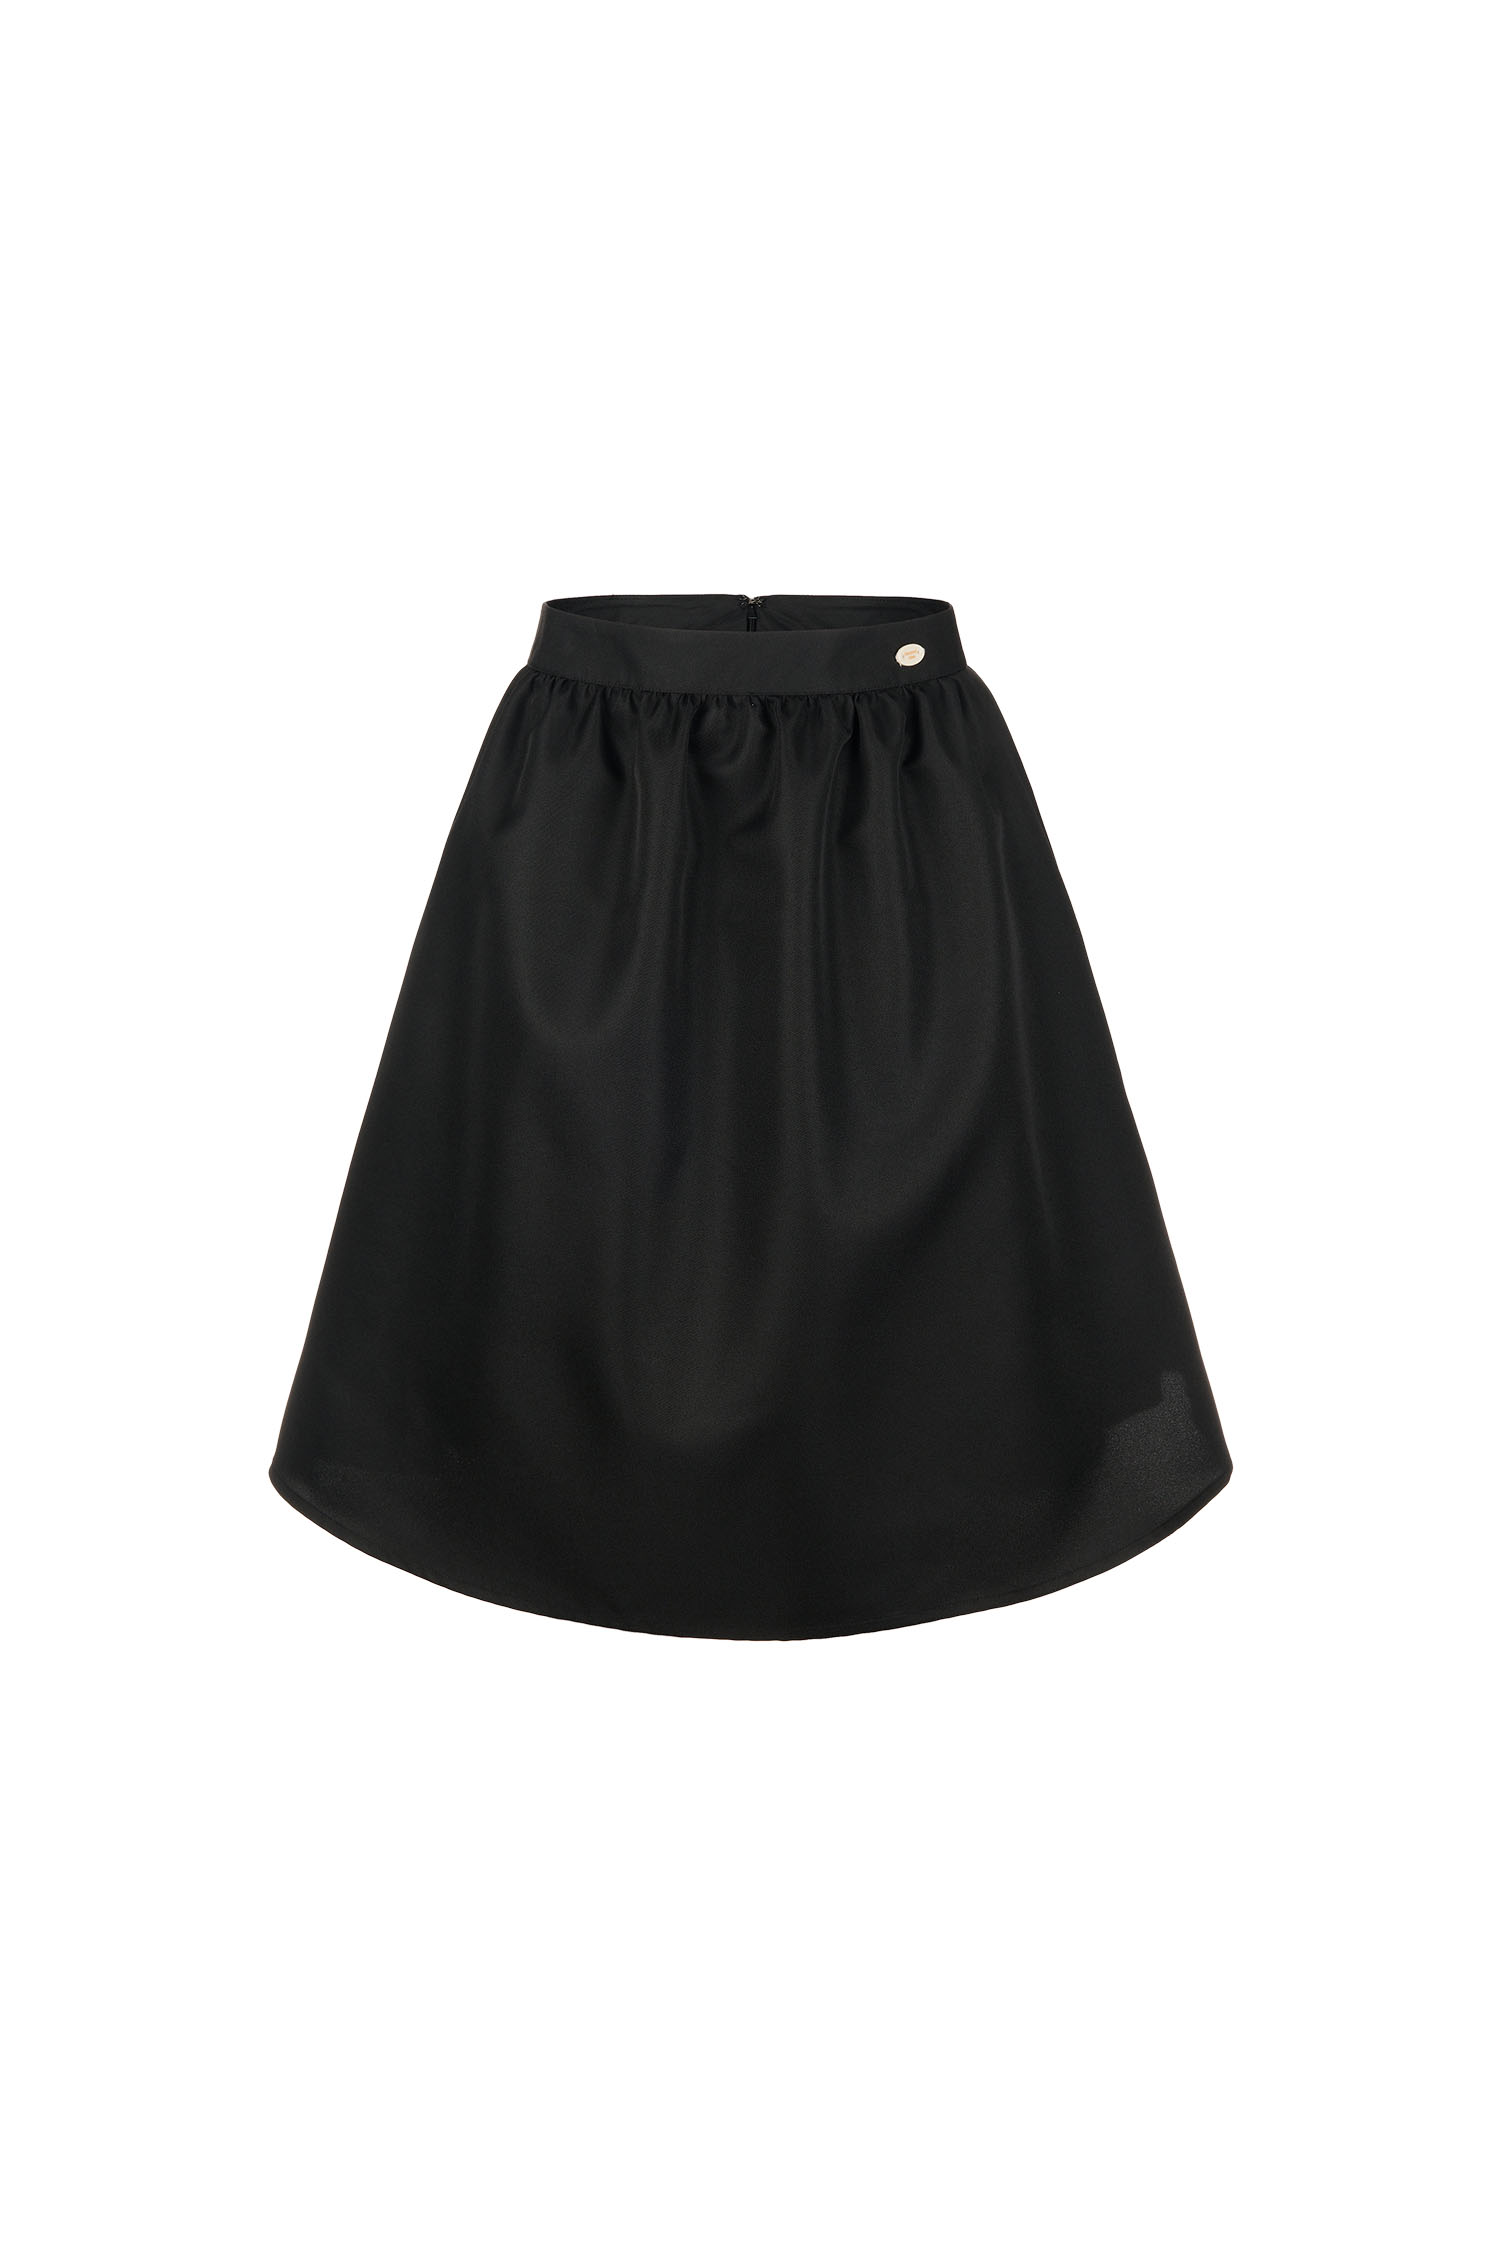 WOMAN ボリューム ツイール スカート [BLACK]